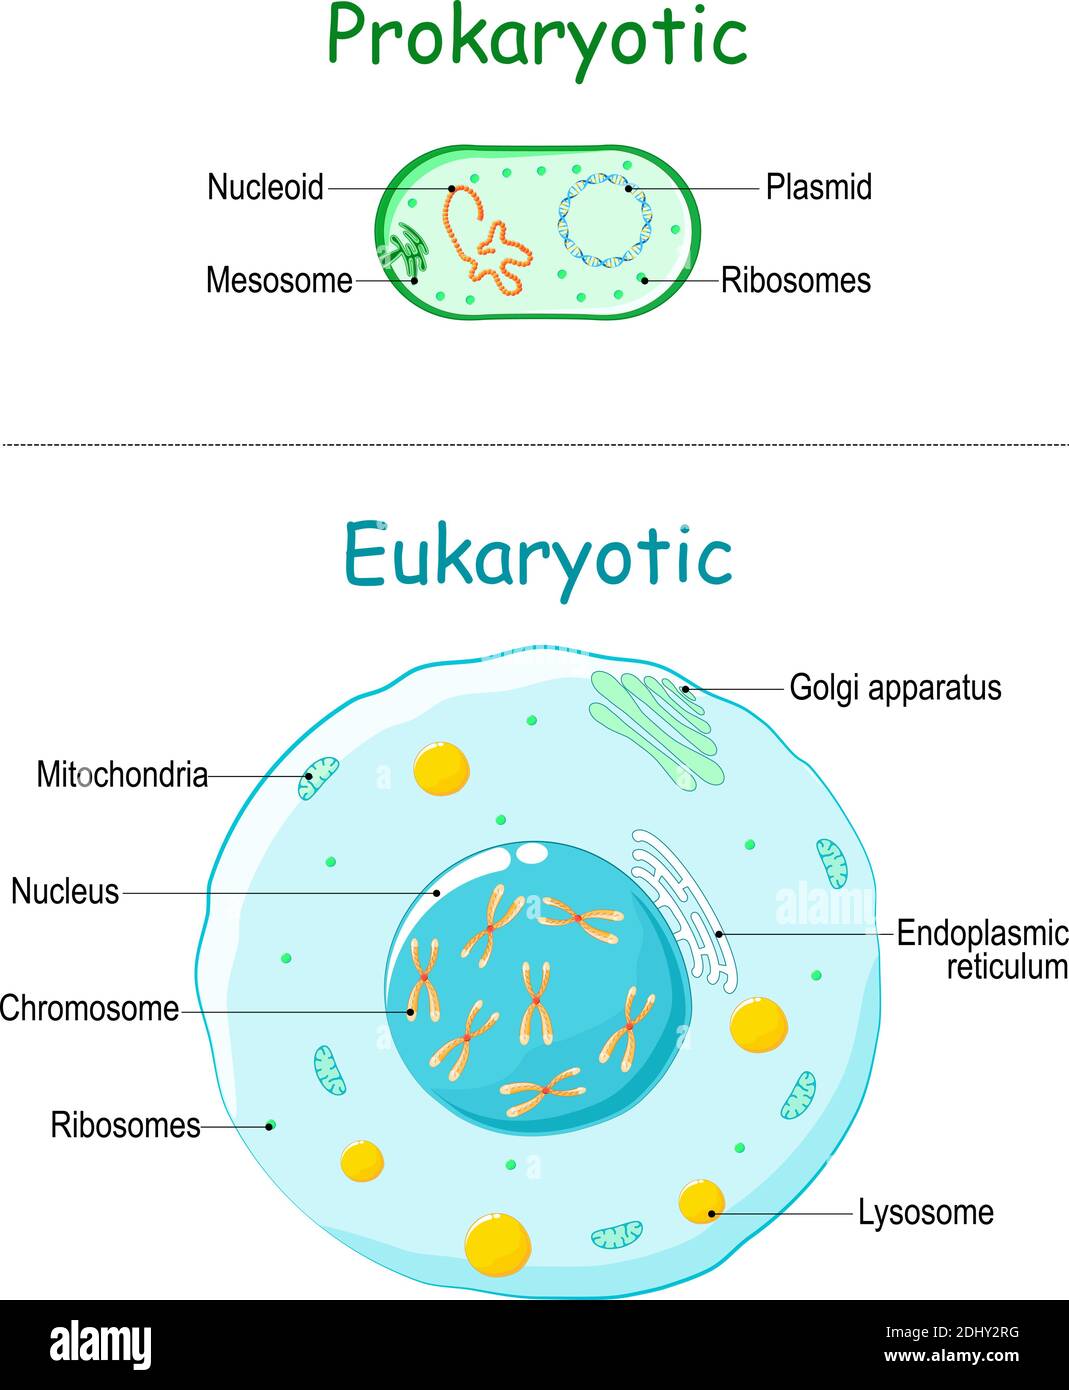 Prokaryote vs Eukaryote. Illustration von eukaryotischen und prokaryotischen Zellen mit Text. Unterschiede zwischen Prokaryoten und eukaryotischen Zellen. vektor Stock Vektor